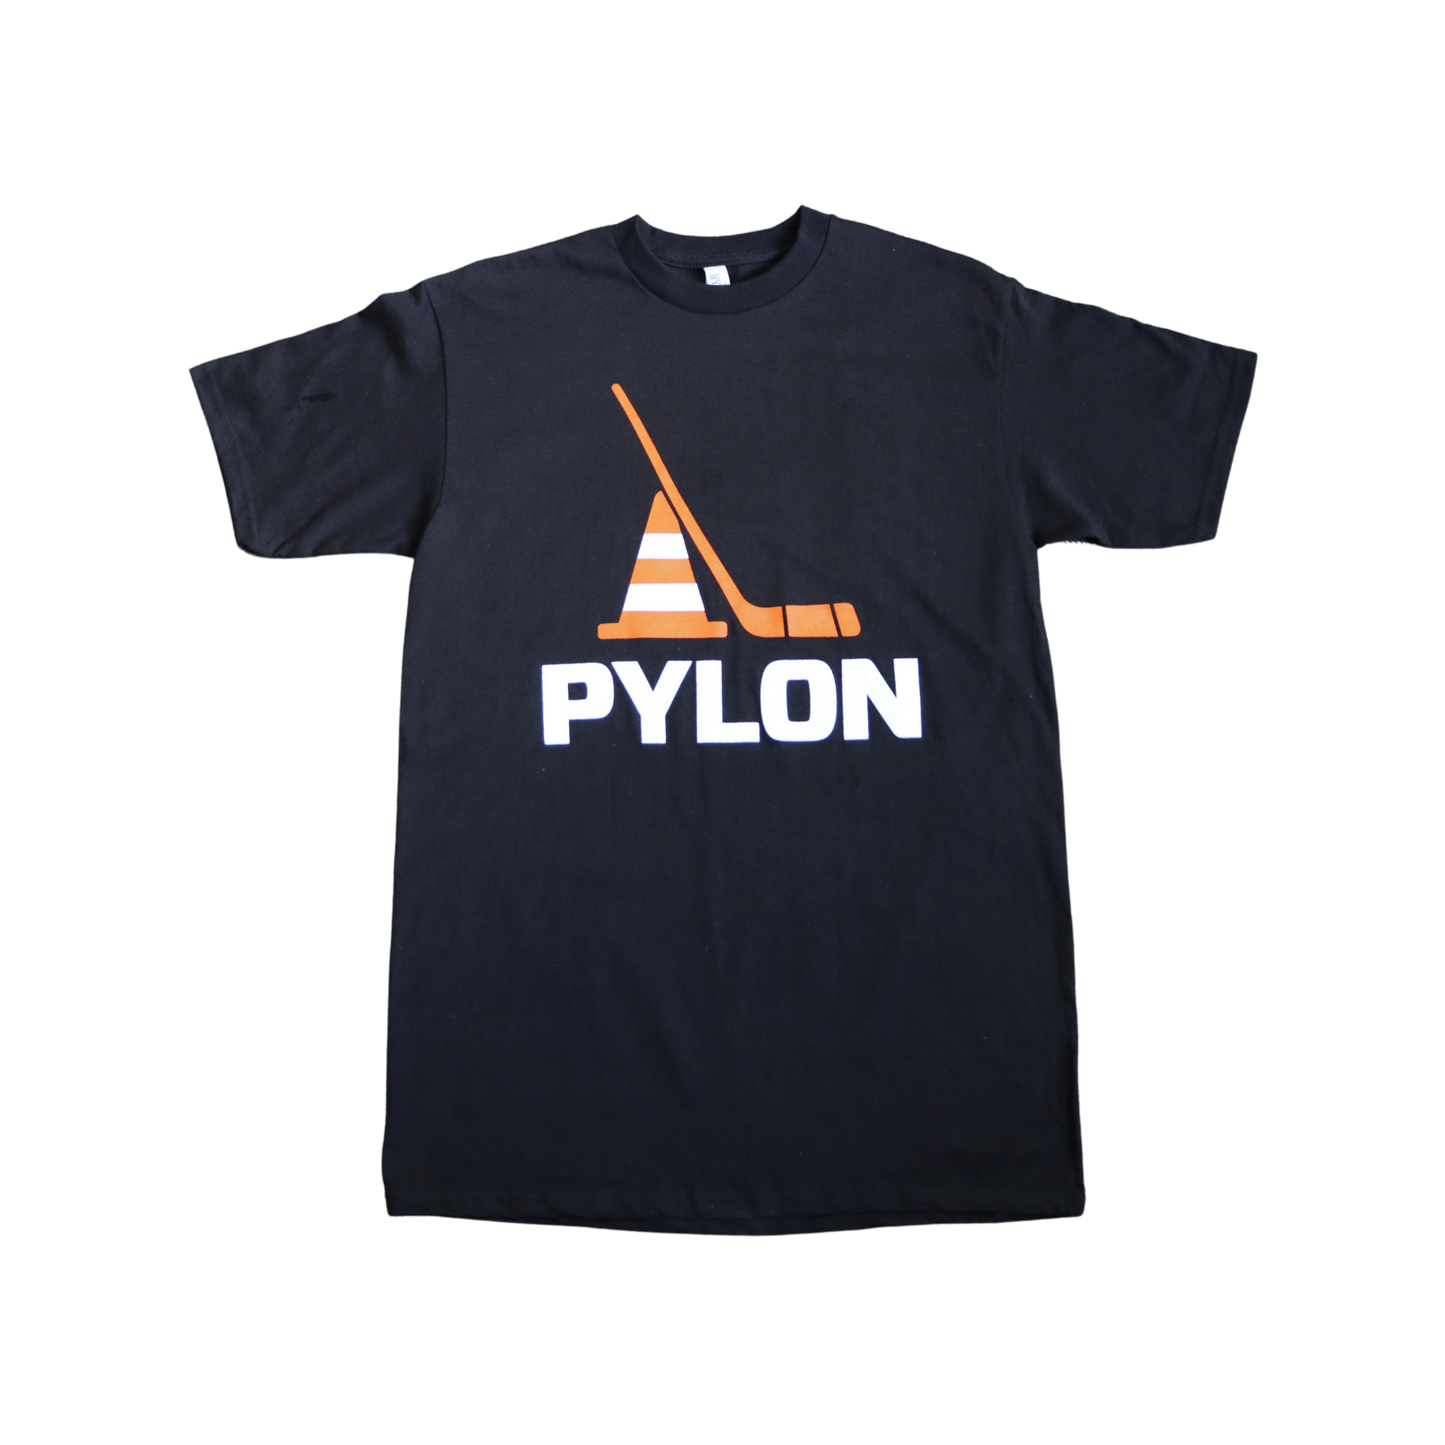 CHEL "Pylon" T-Shirt